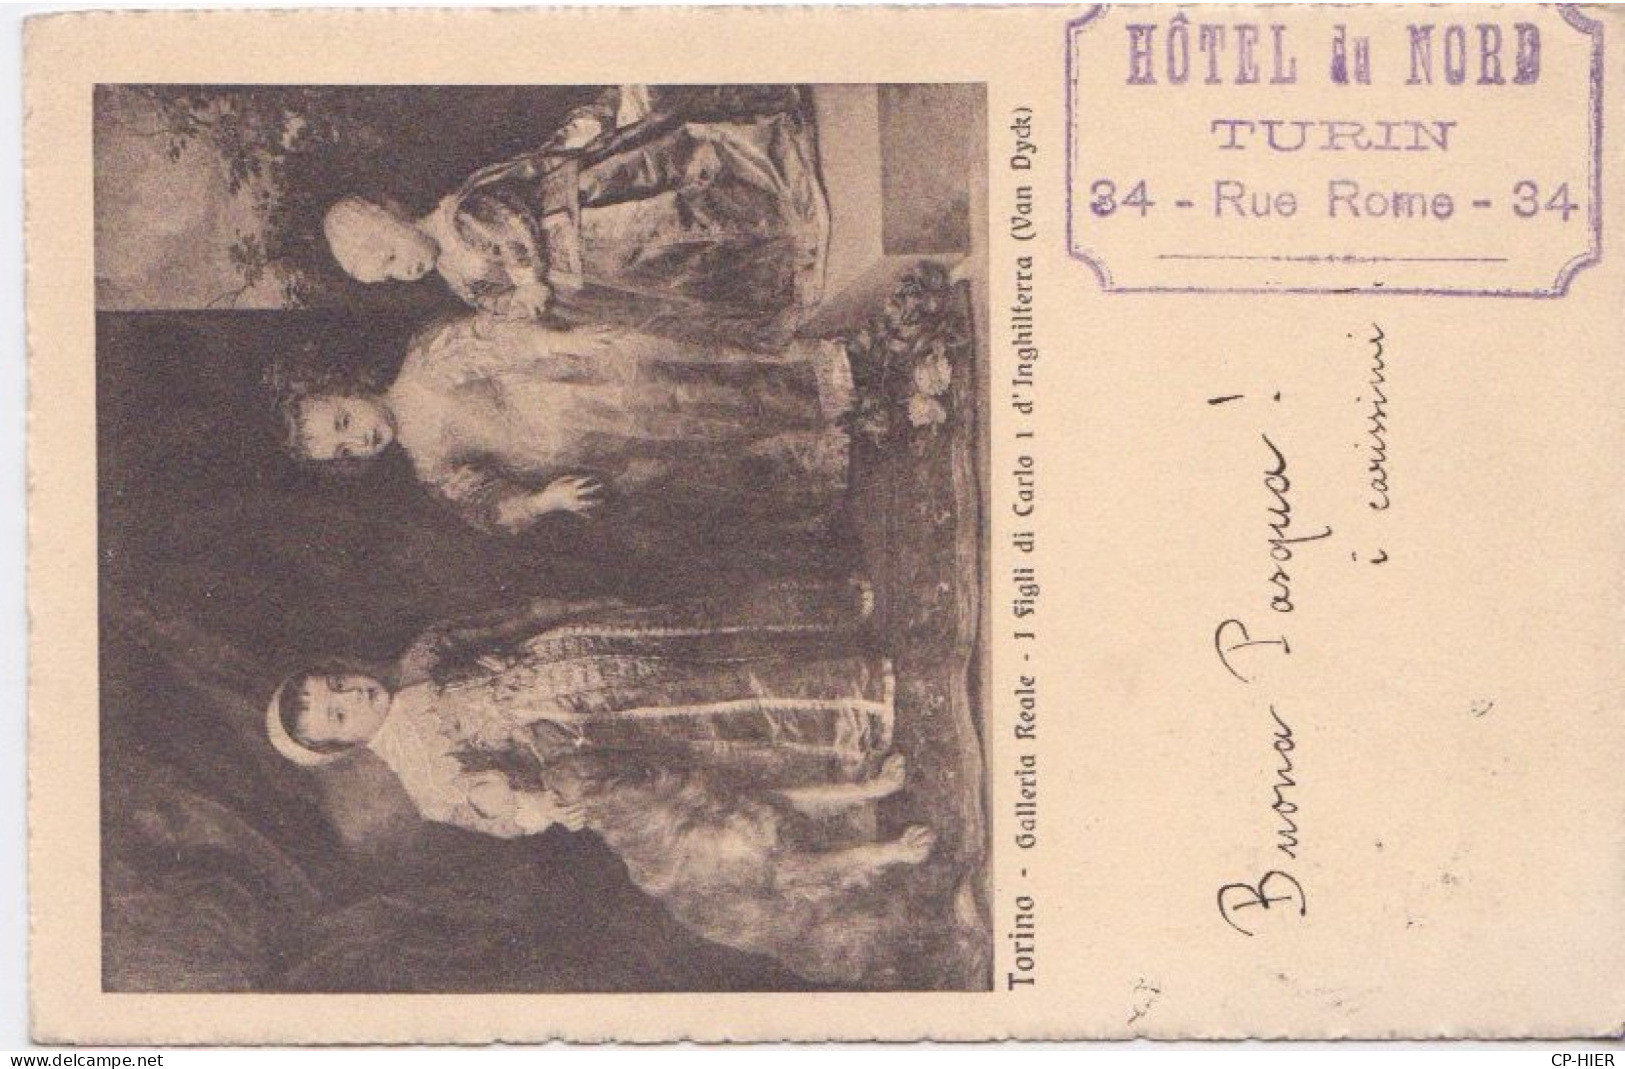 1908 - ITALIE - ITALIA - SICILIA - TORINO - CACHET HOTEL DU NORD DE TURIN  34 RUE DE ROME - Bars, Hotels & Restaurants